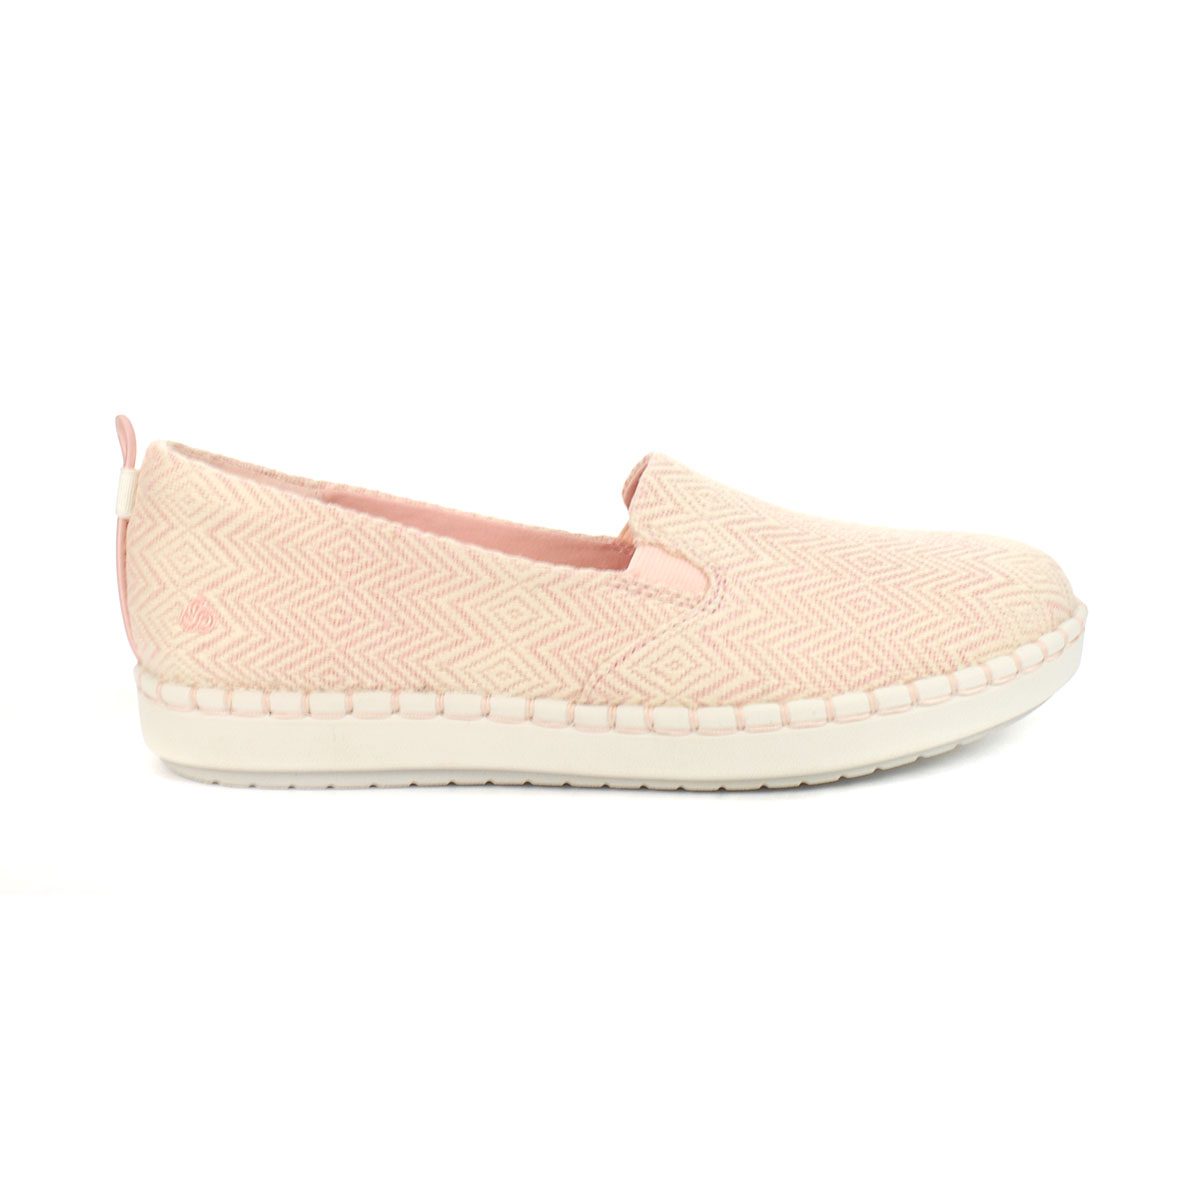 Clarks Women's Step Glow Pink Slip-On Loafers 26147502